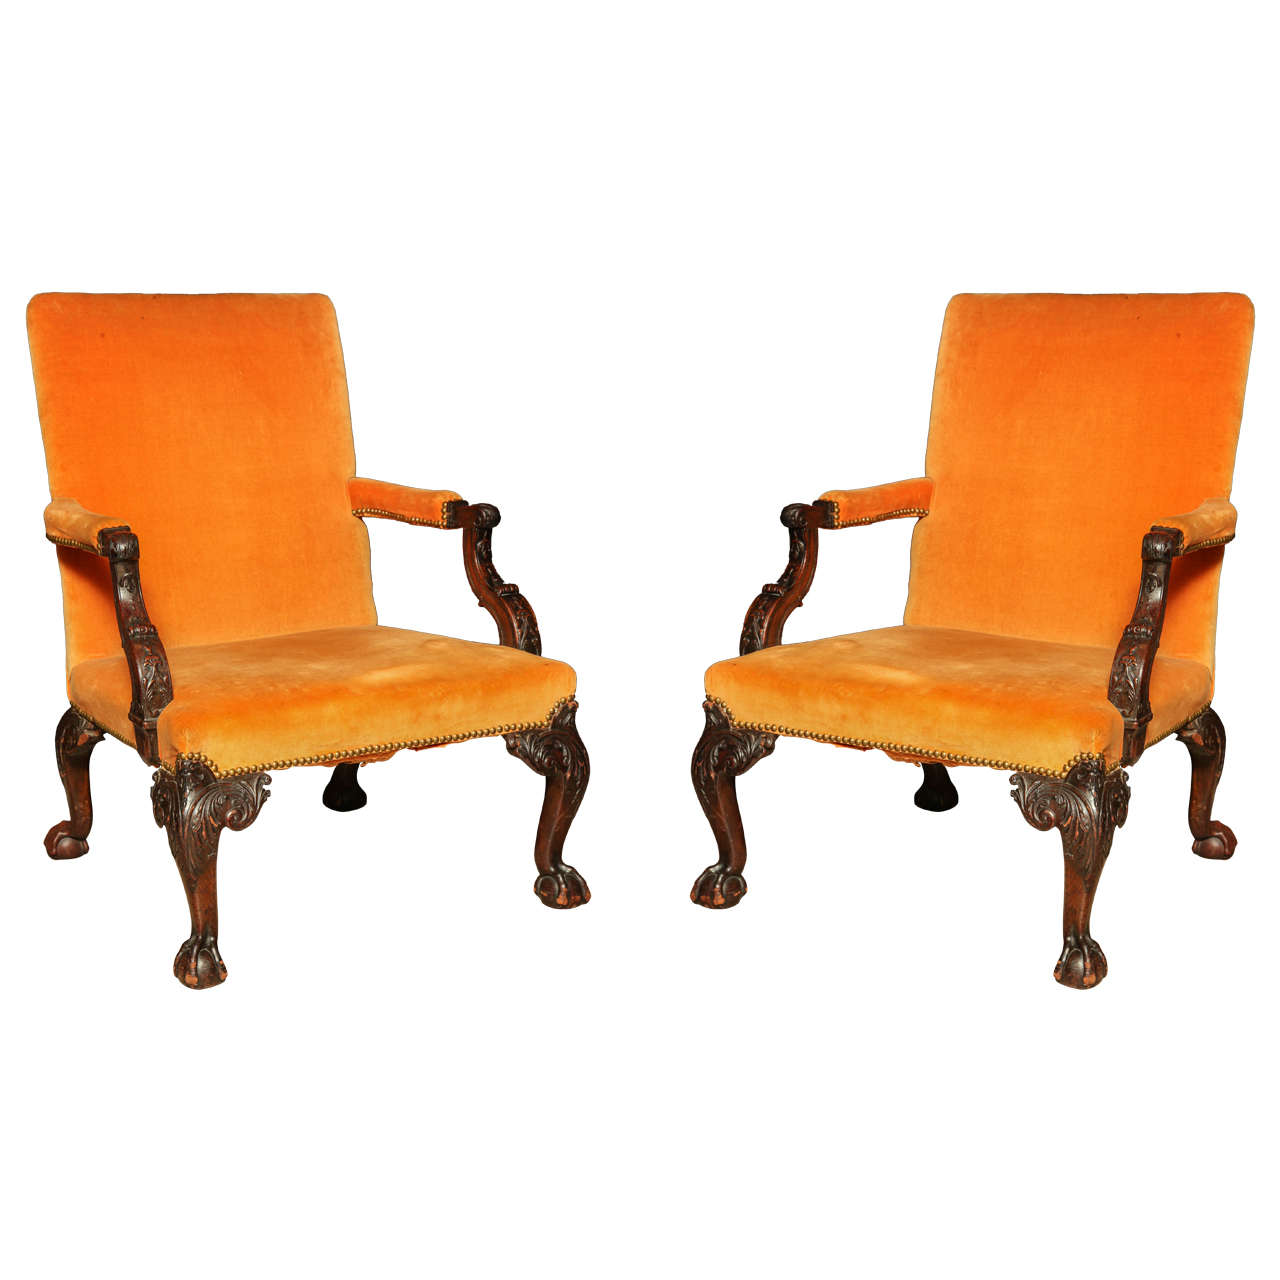 Pair of George III Gainsborough Chairs